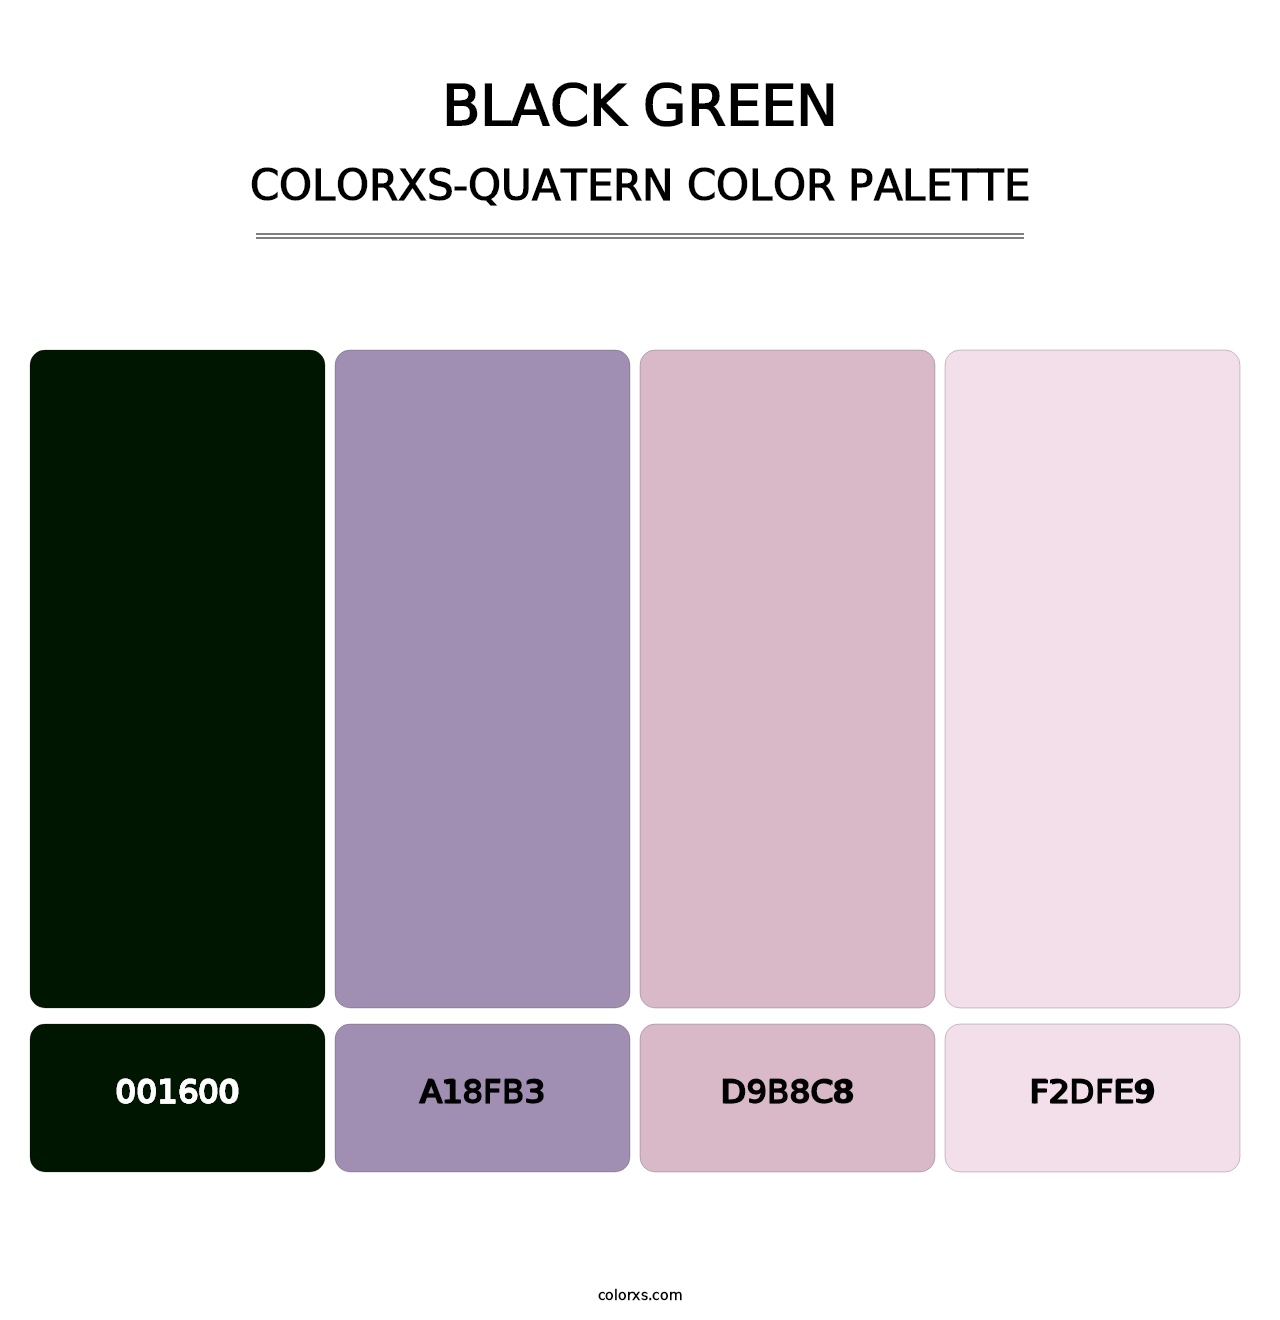 Black Green - Colorxs Quatern Palette